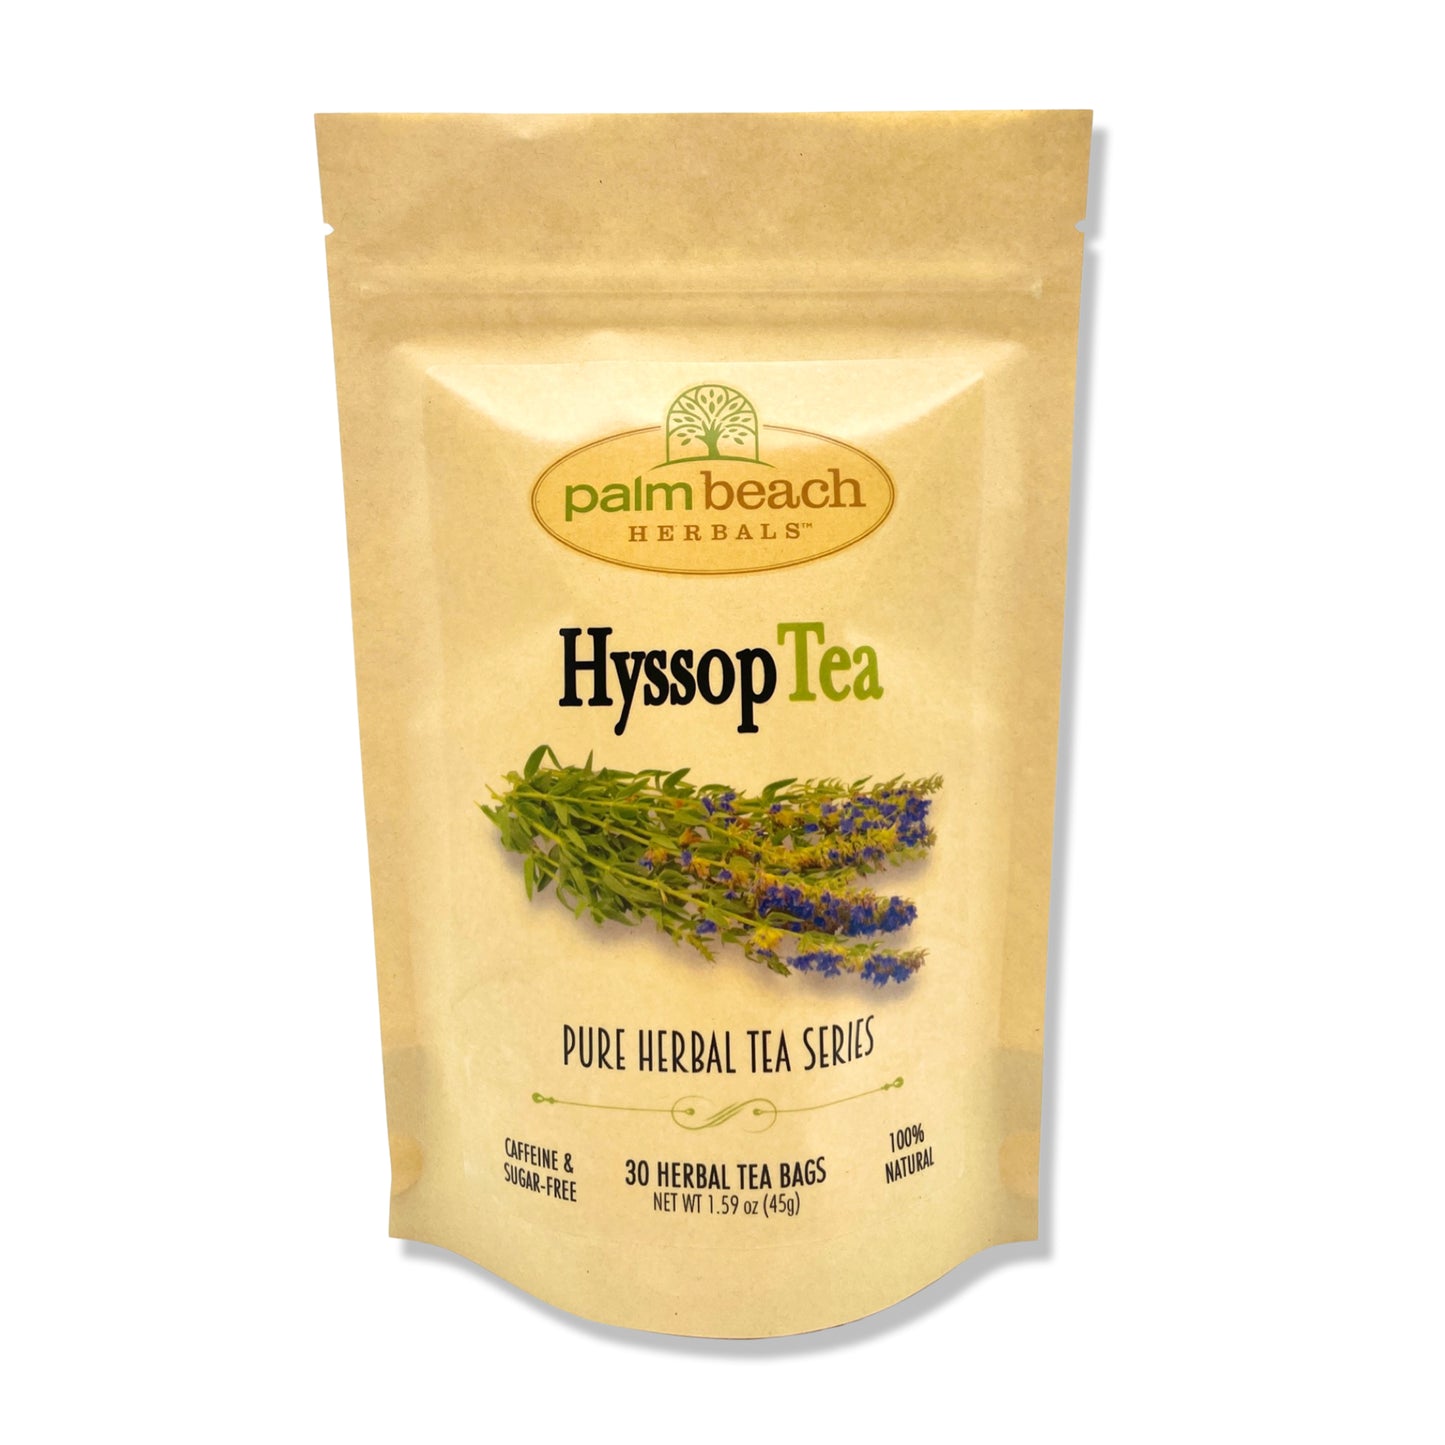 Hyssop Tea